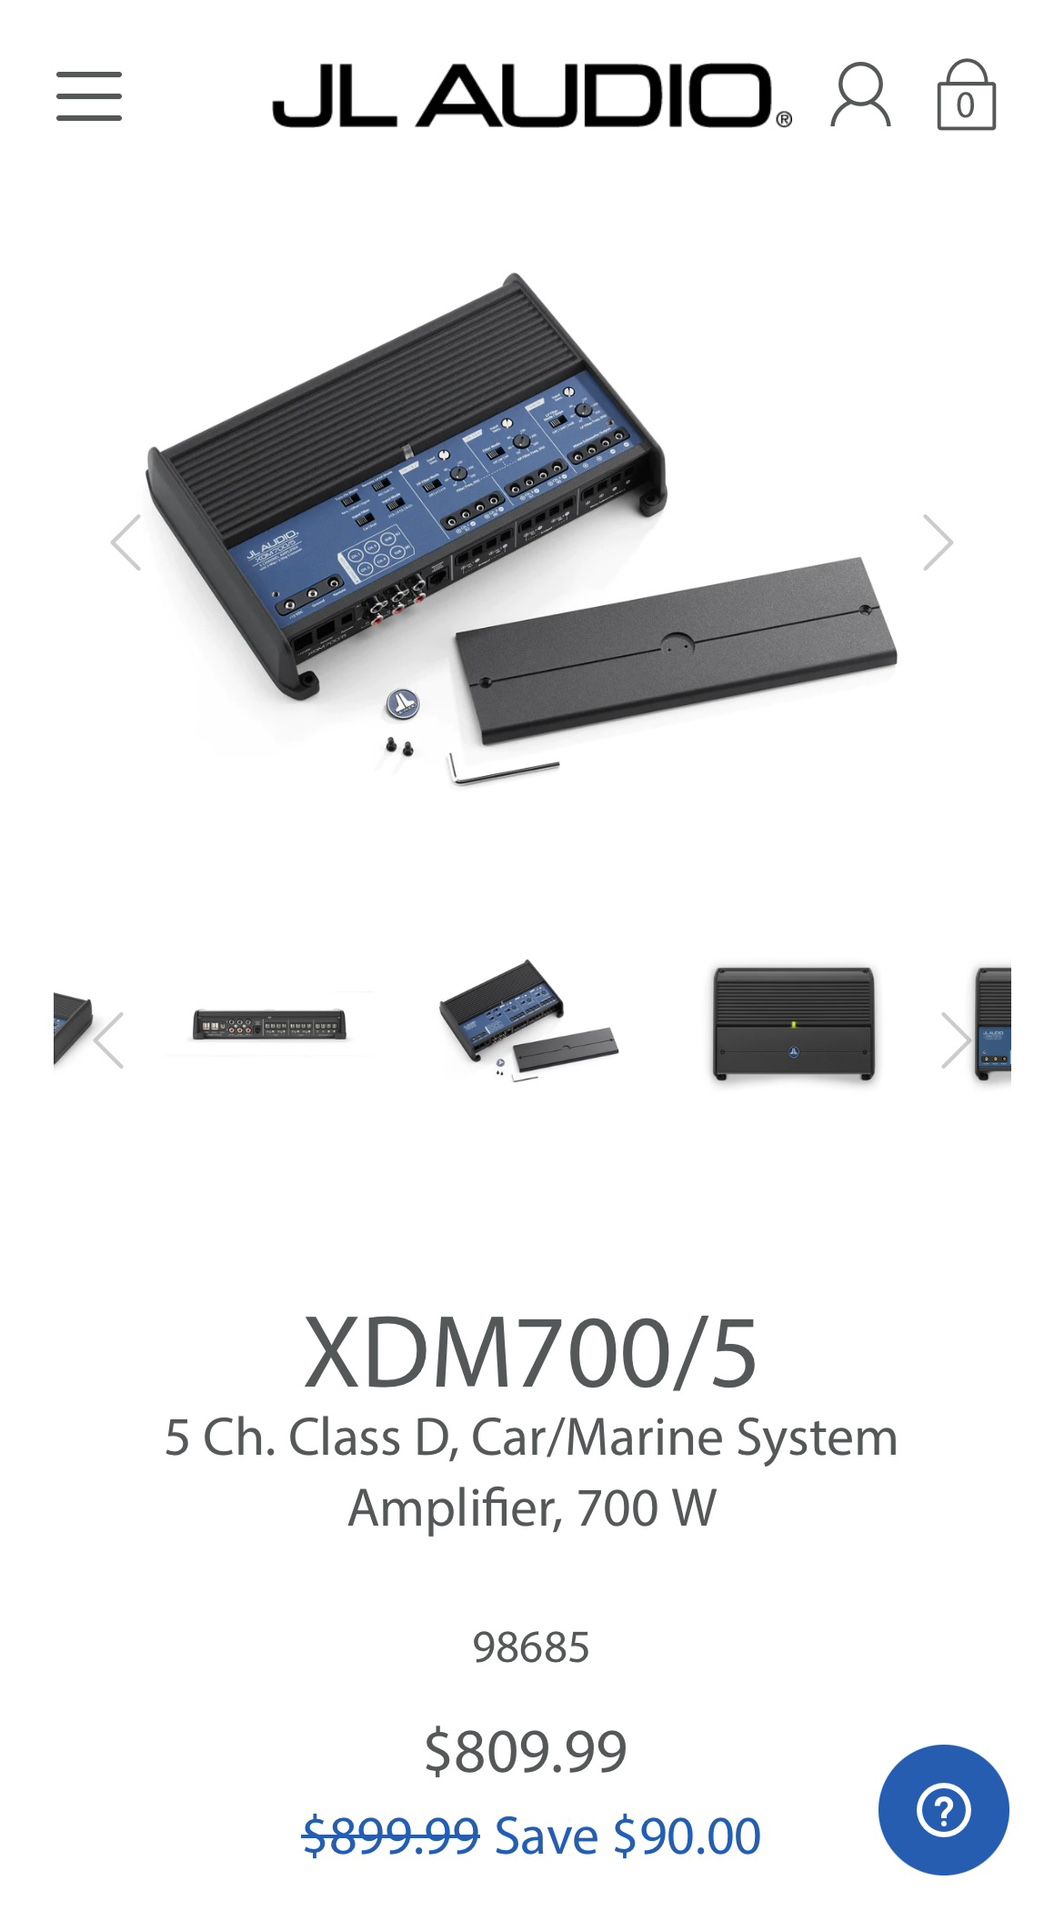 XDM700/5 5 Ch. Class D, Car/Marine System Amplifier, 700 W